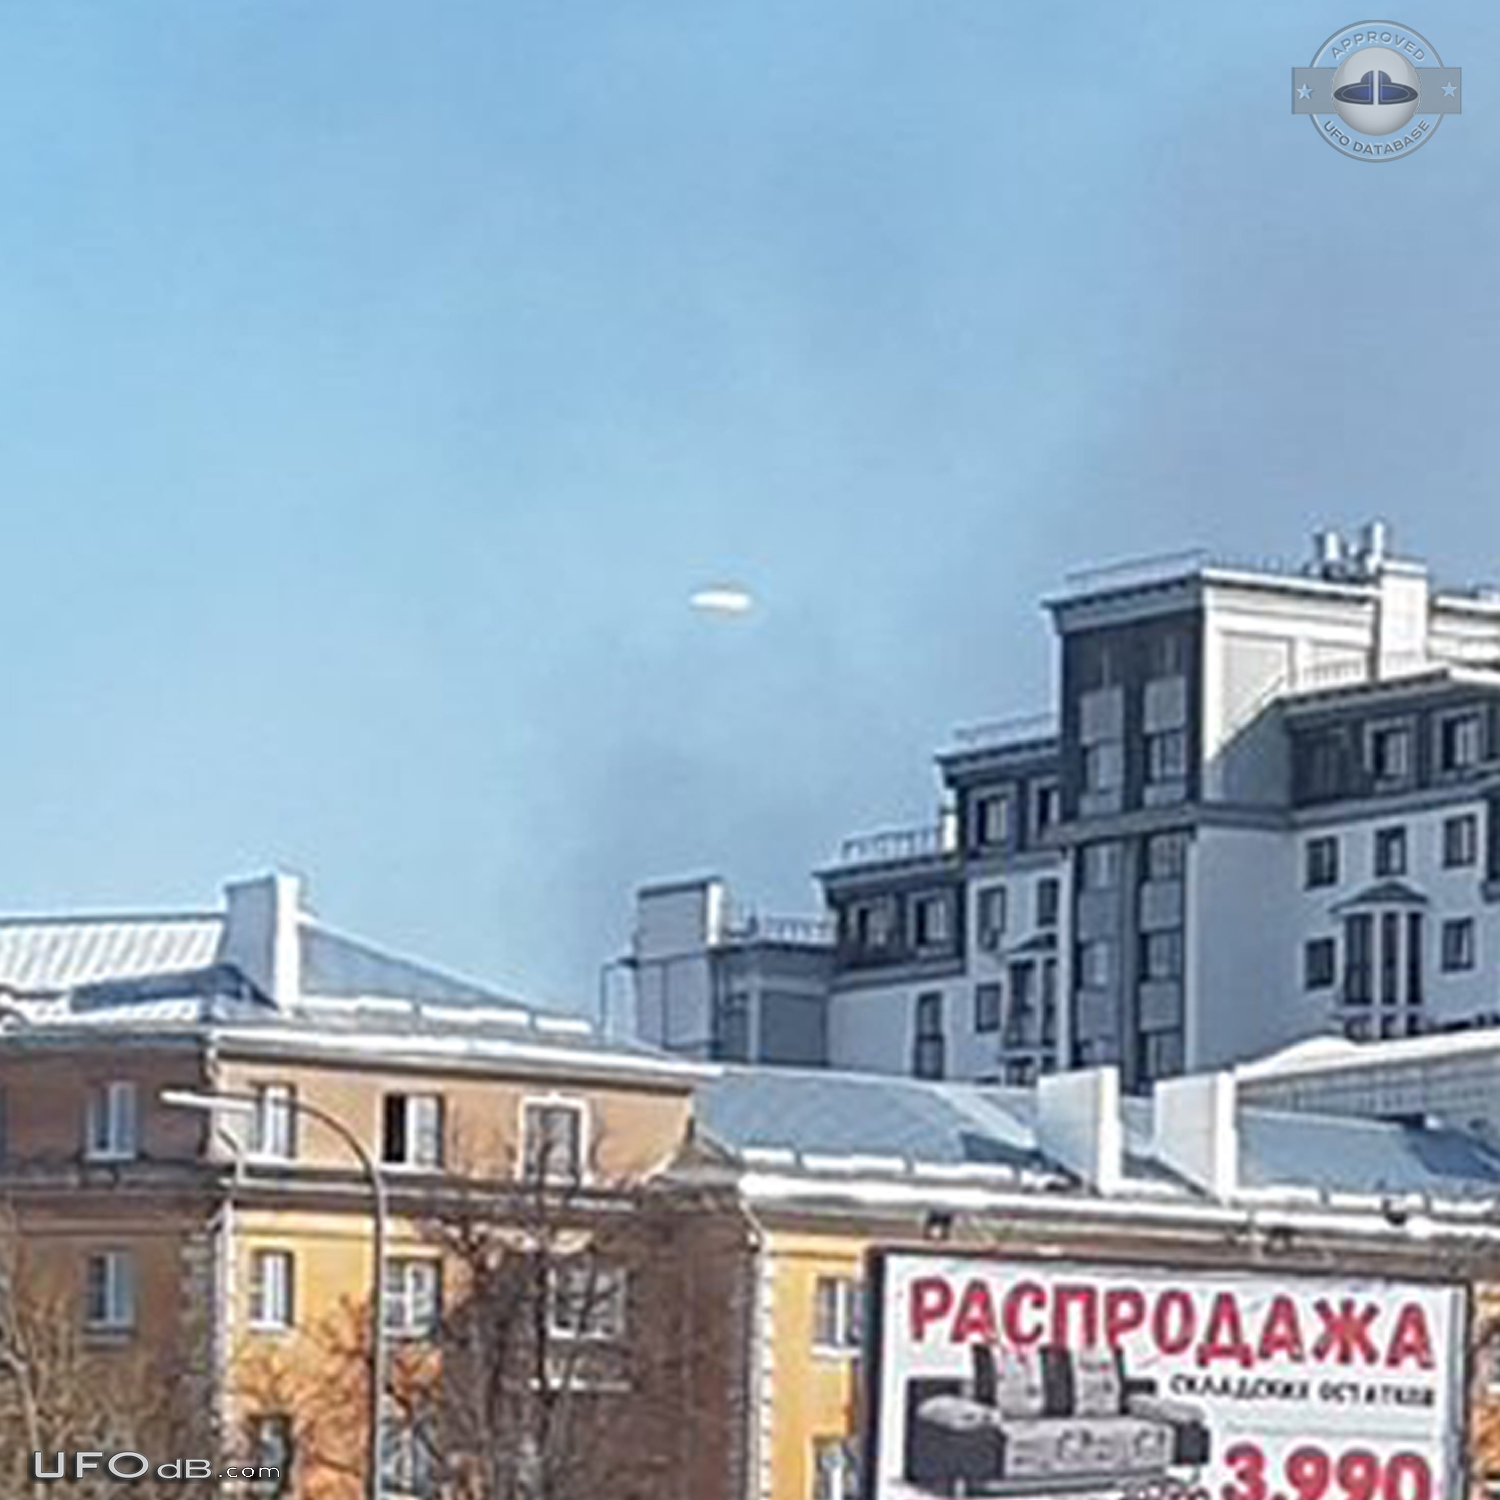 Photo of smoke on the horizon capture UFO Saucer - Ryazan Russia 2017 UFO Picture #804-4